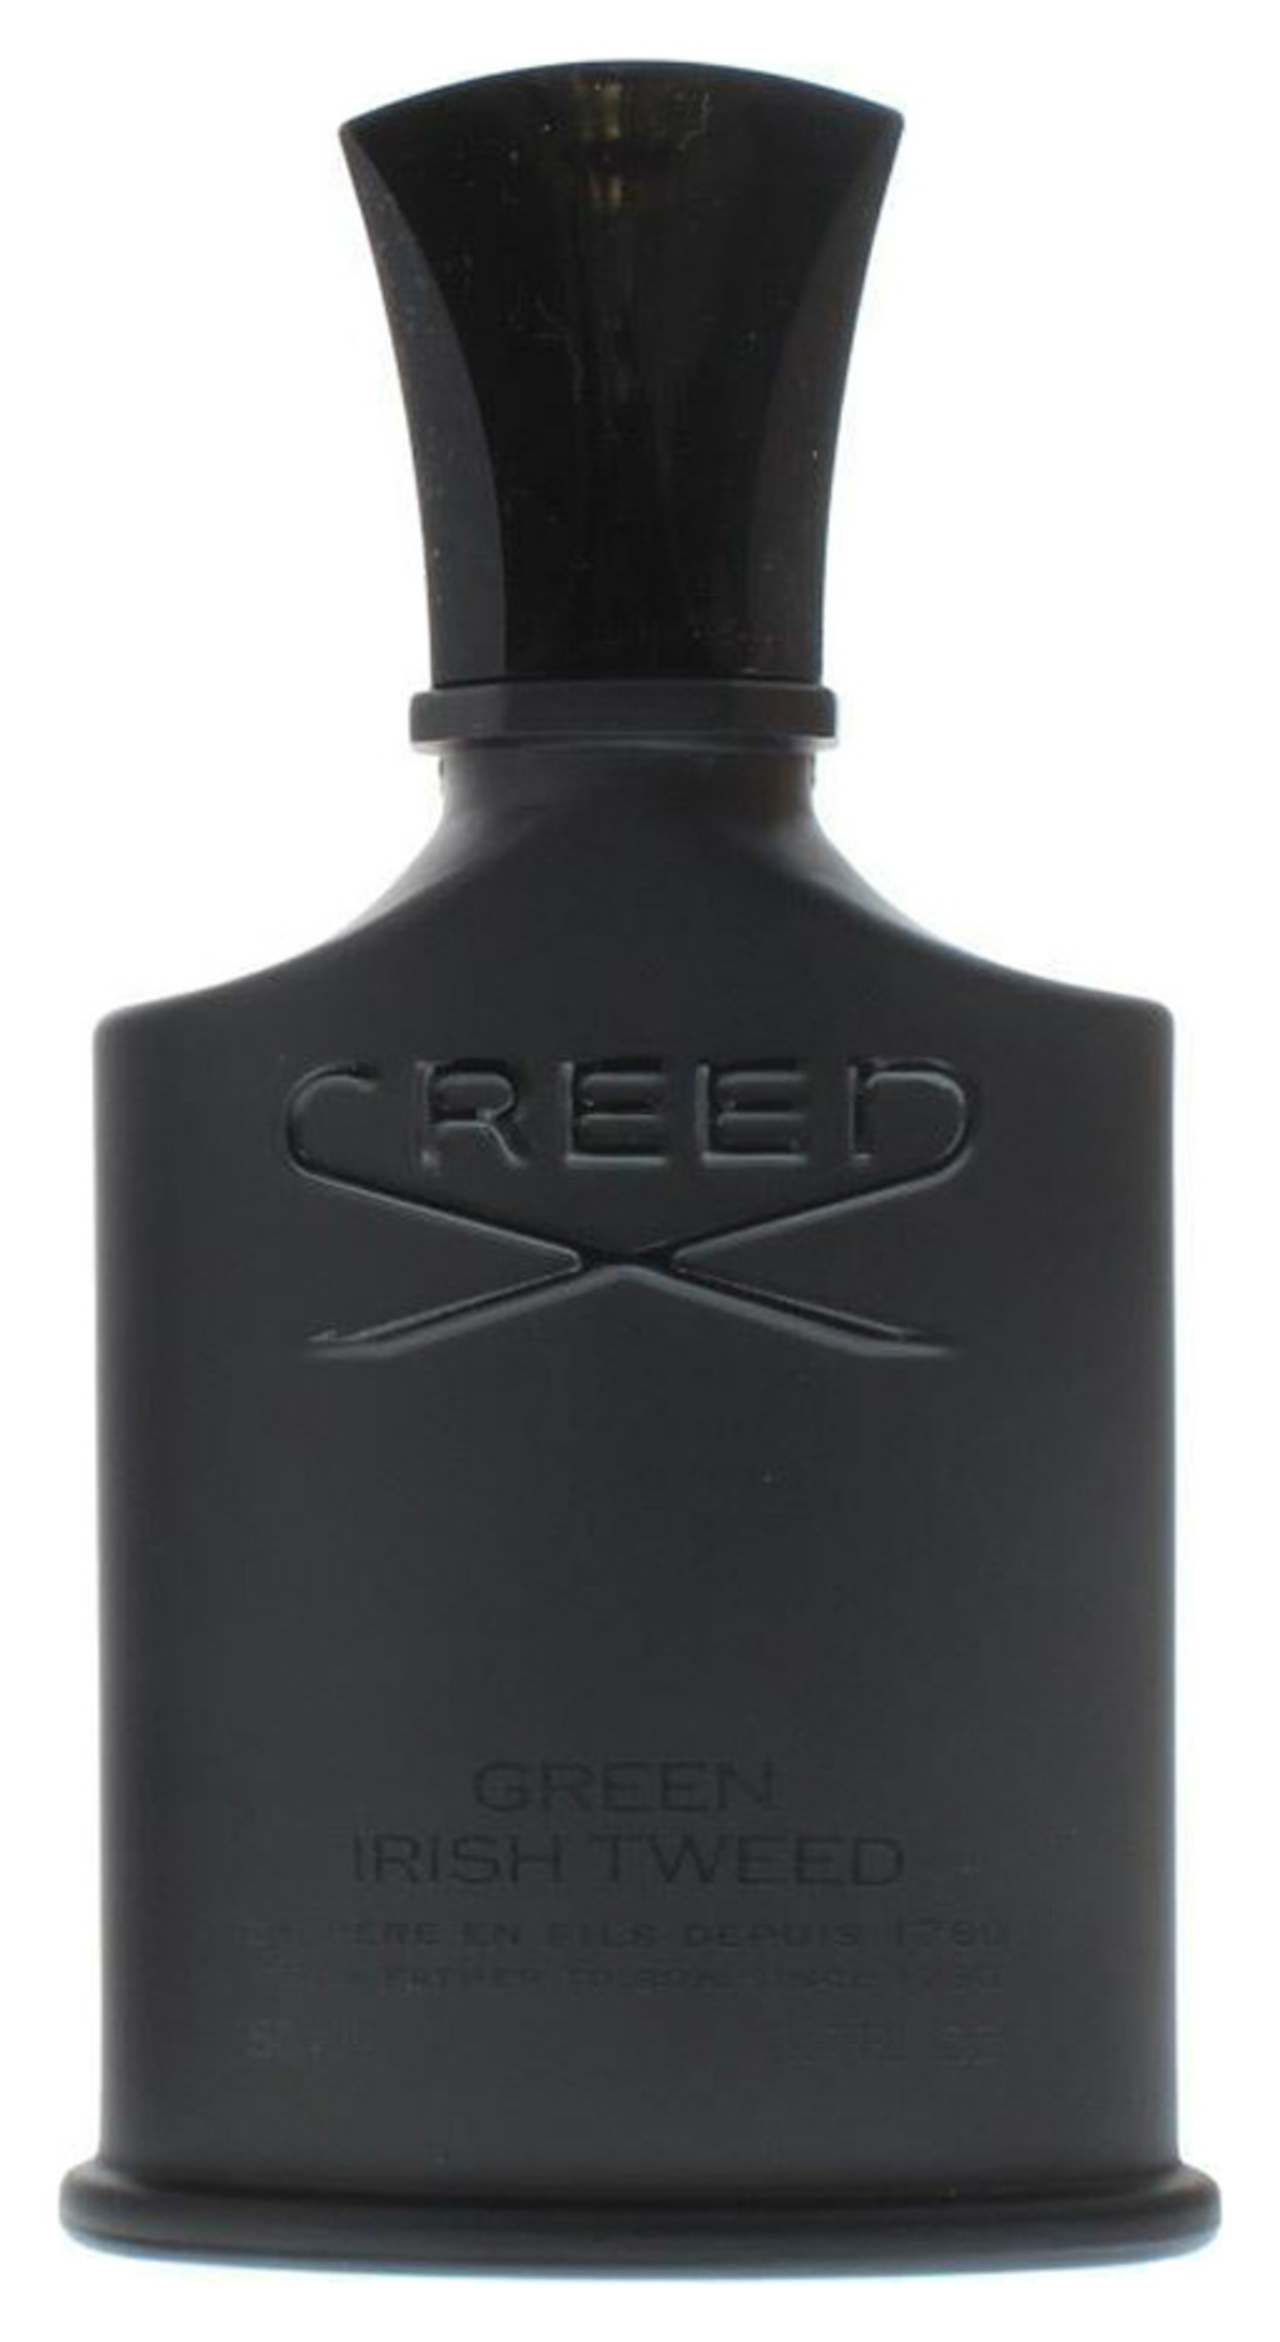 Creed Green Irish Tweed 50мл. Creed Green Irish Tweed EDP 50 ml. Creed Green Irish Tweed парфюмерная вода 100 мл. Туалетная вода мужская Creed Green Irish Tweed. Creed green irish